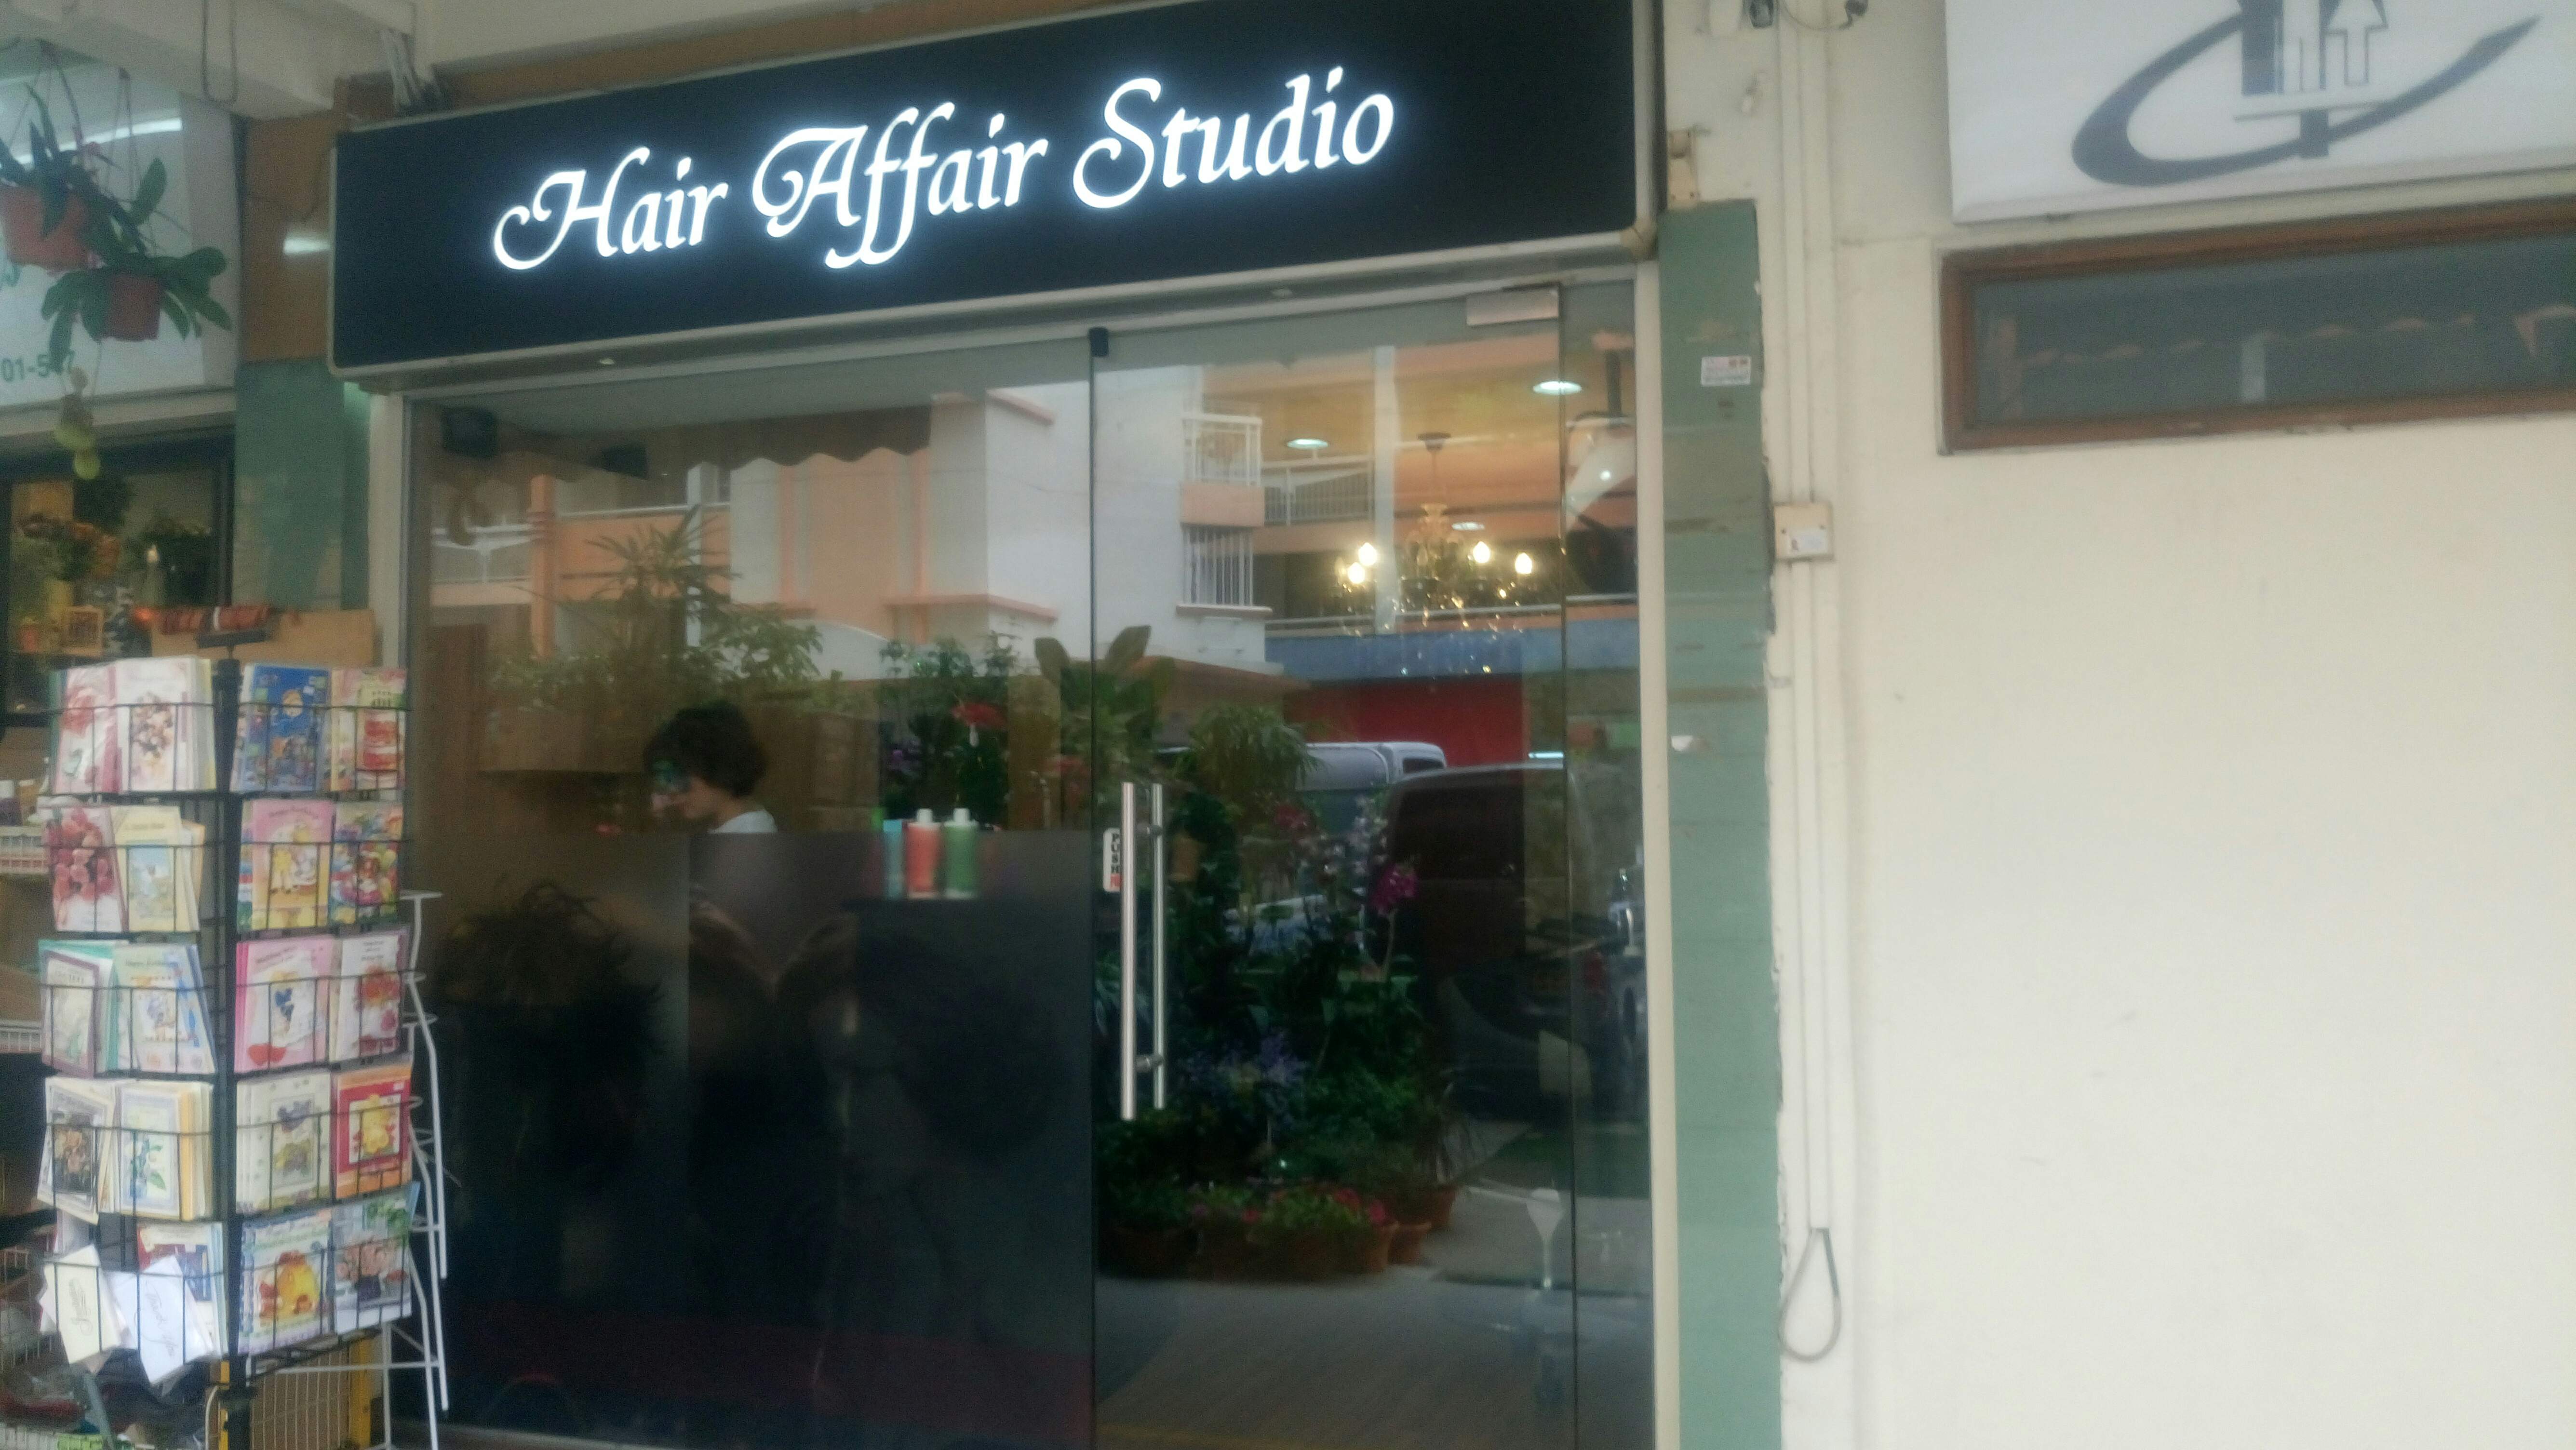 Singapore Service - Hair+Salon - Haor Affair Studio | Nestia